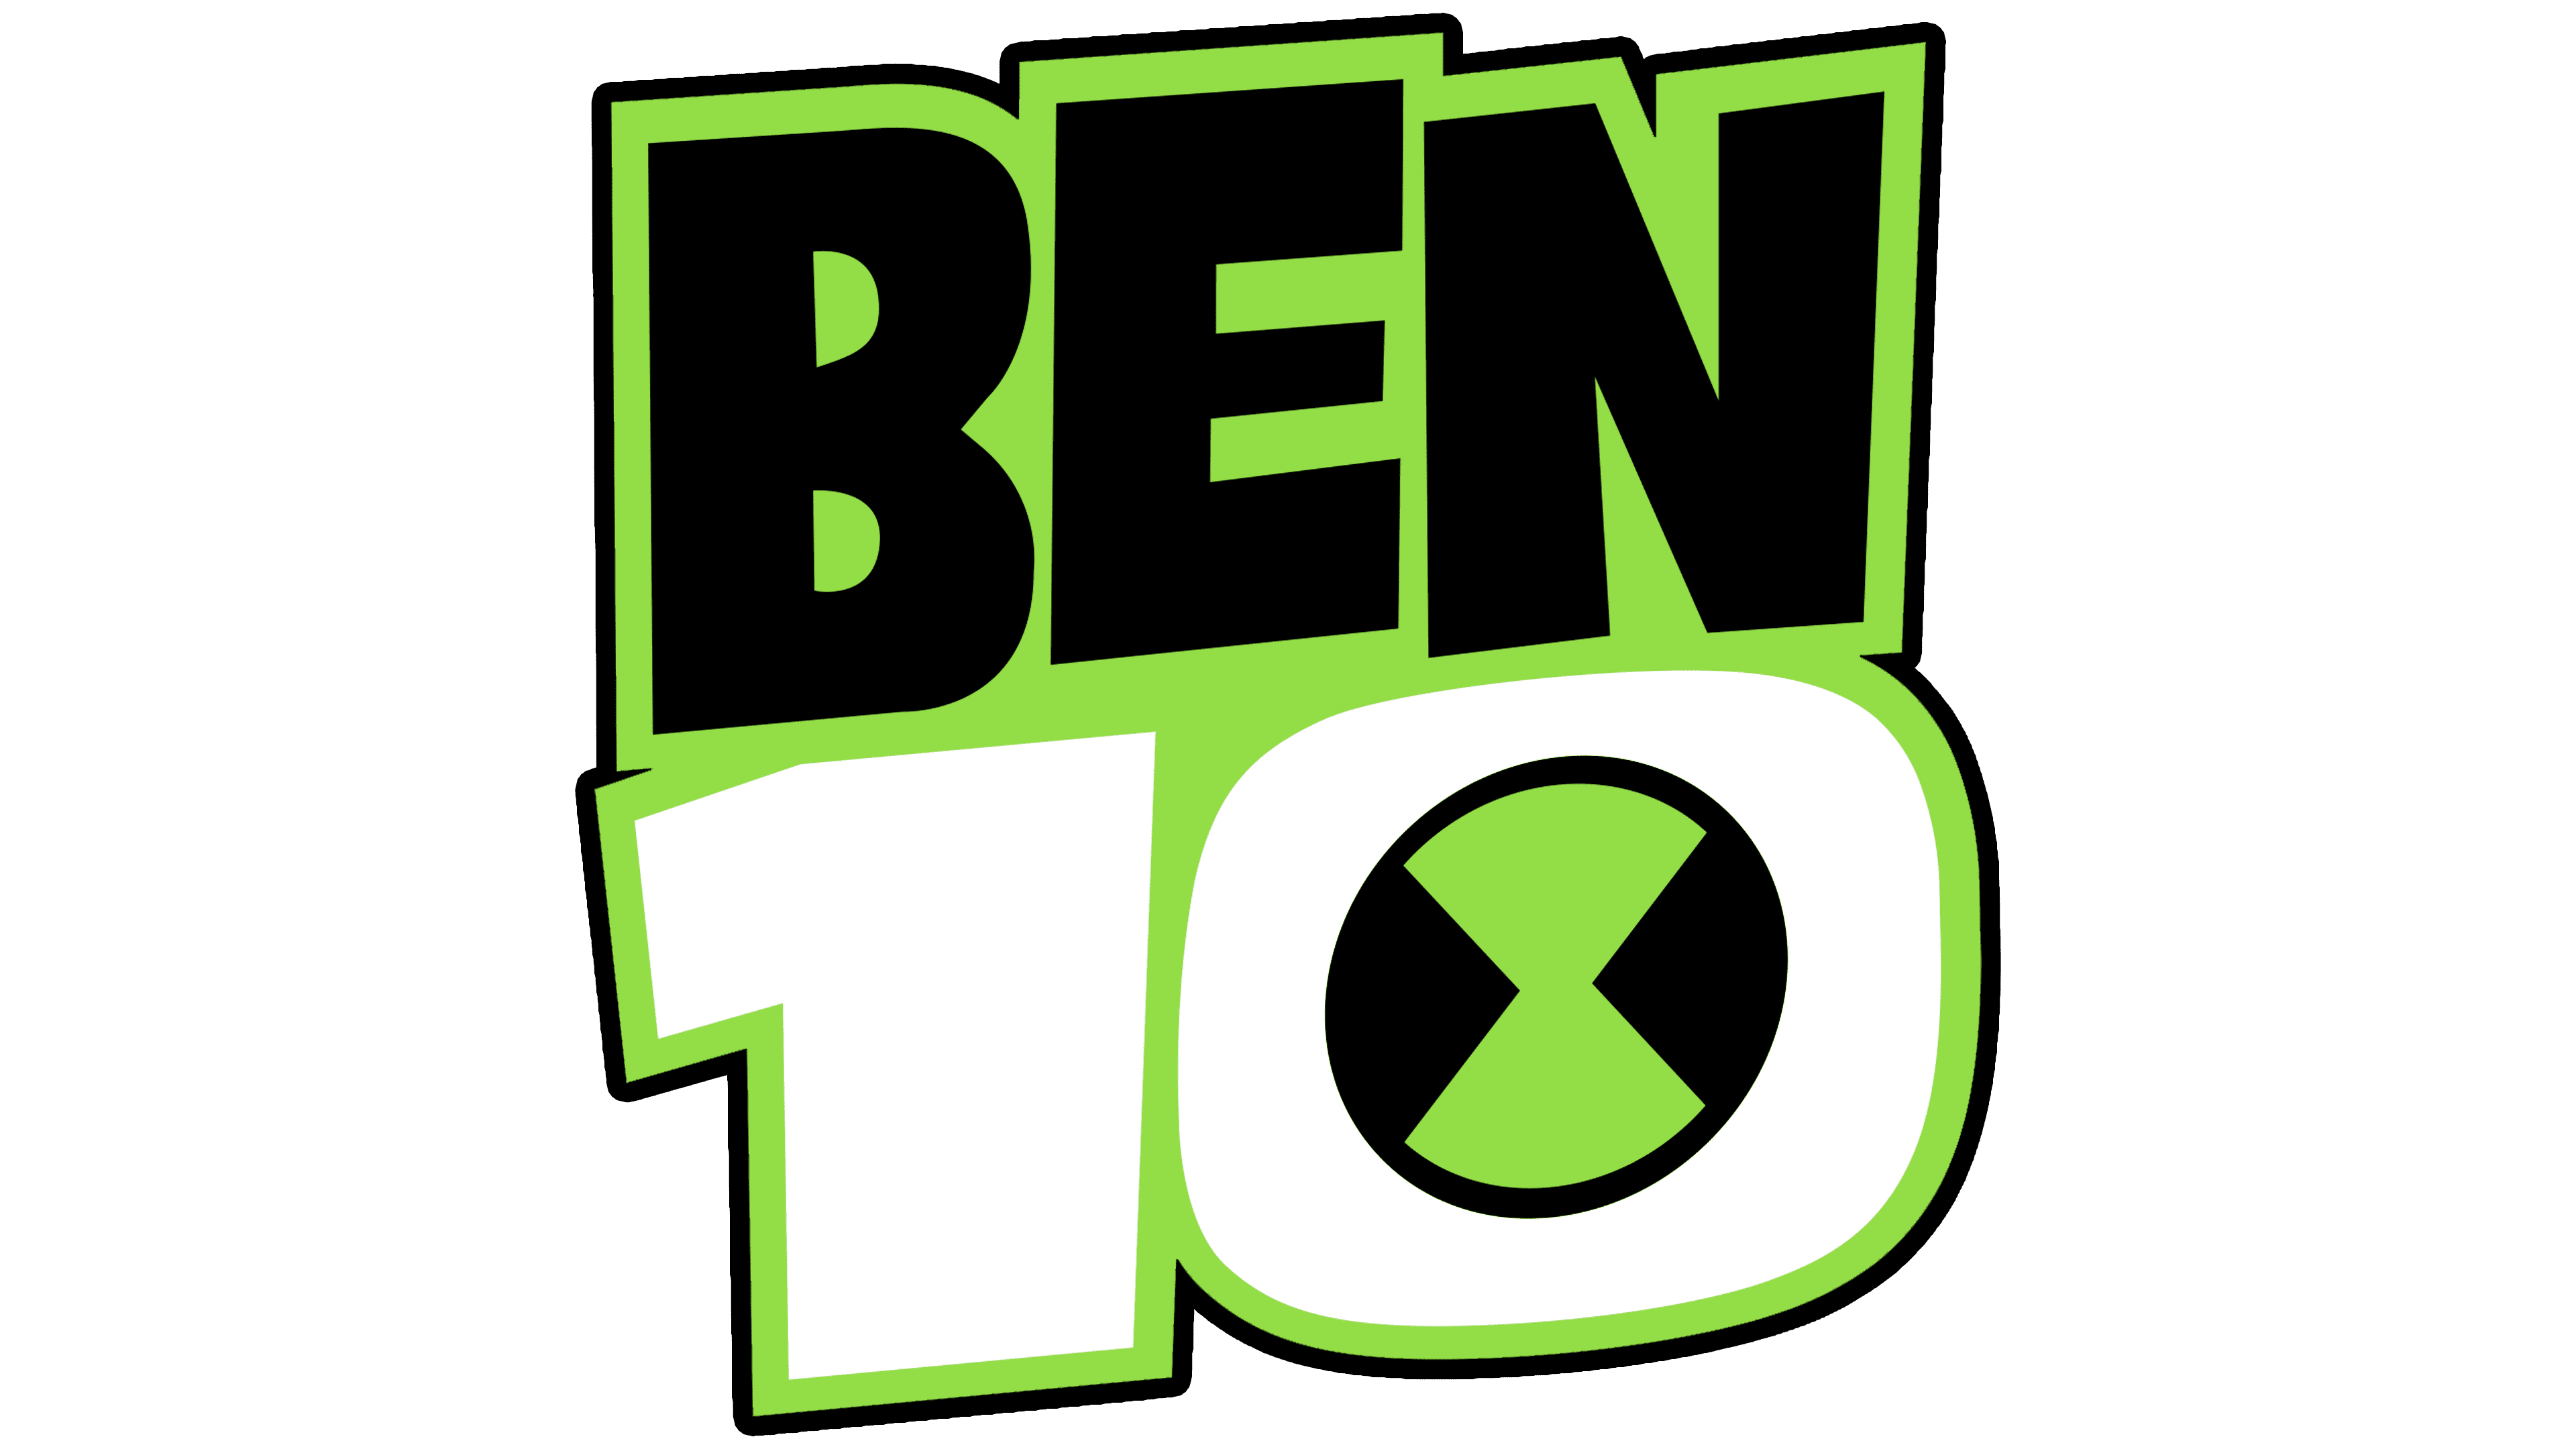 Wallpaper - Ben10 'Original Omnitrix' Logo by Kalangozilla on DeviantArt